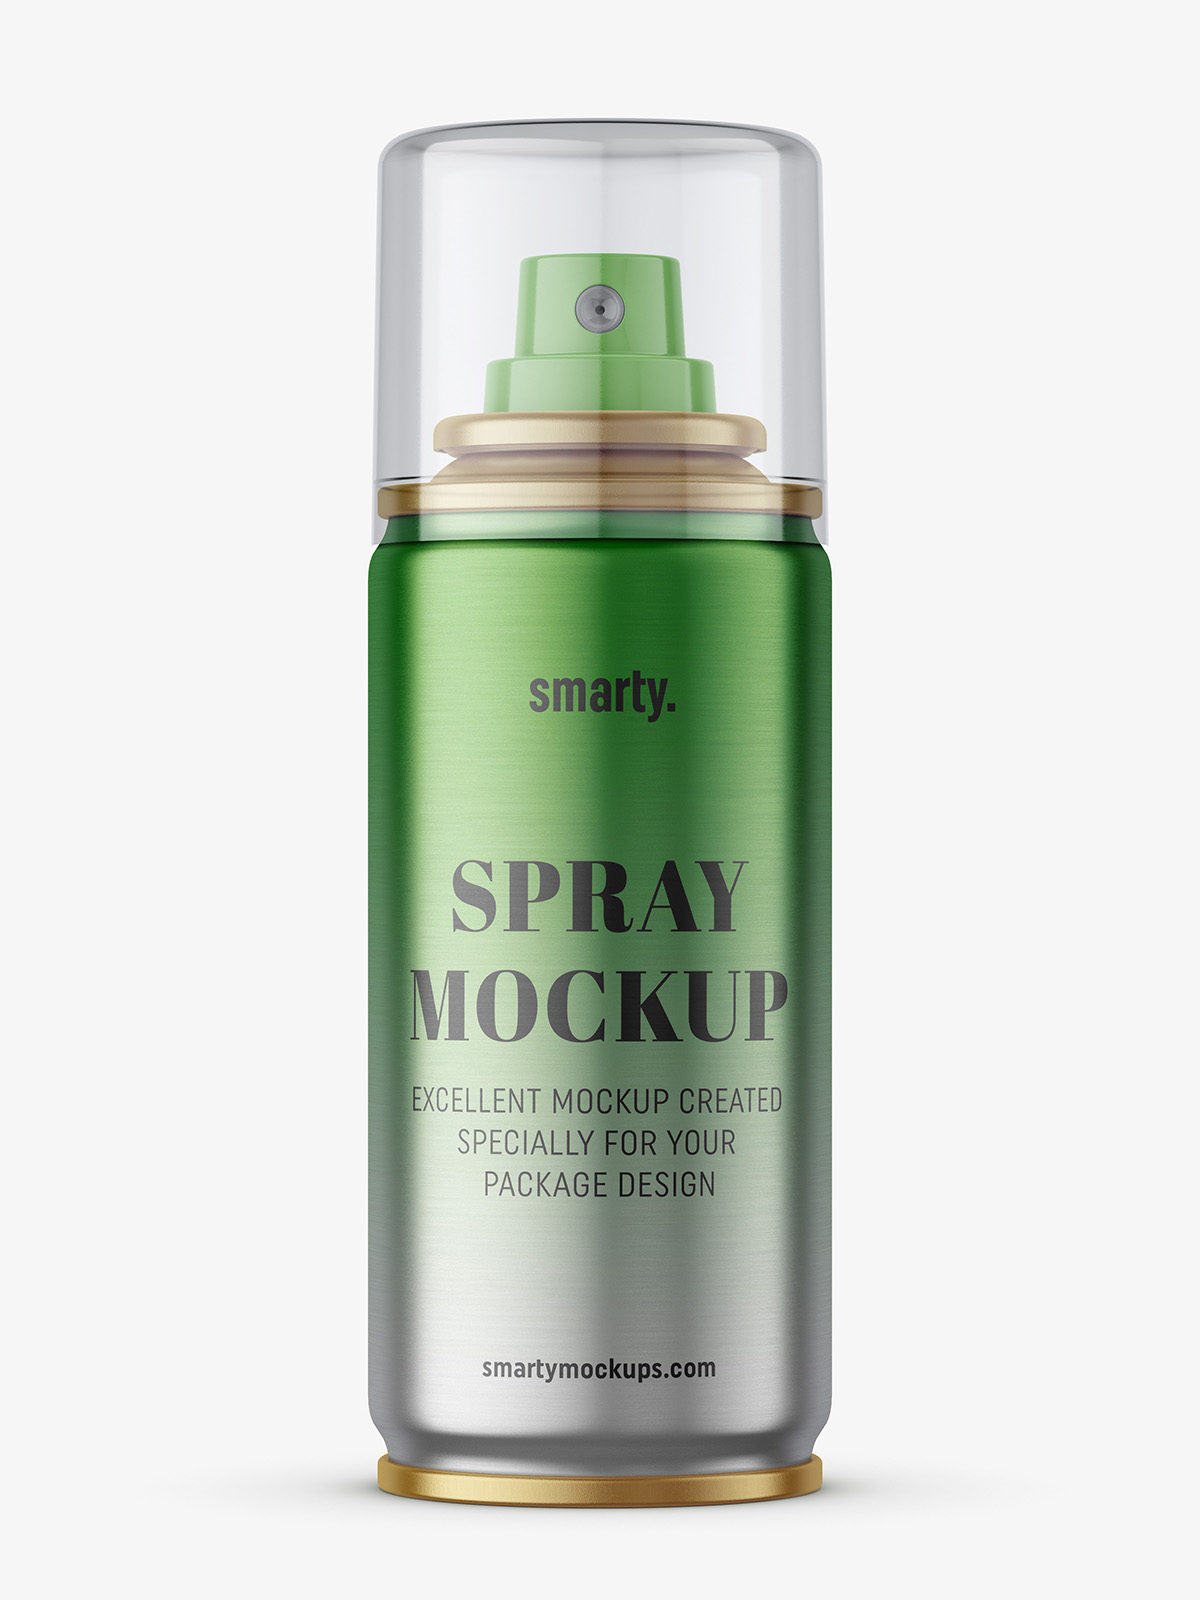 Download Metallic spray mockup - Smarty Mockups